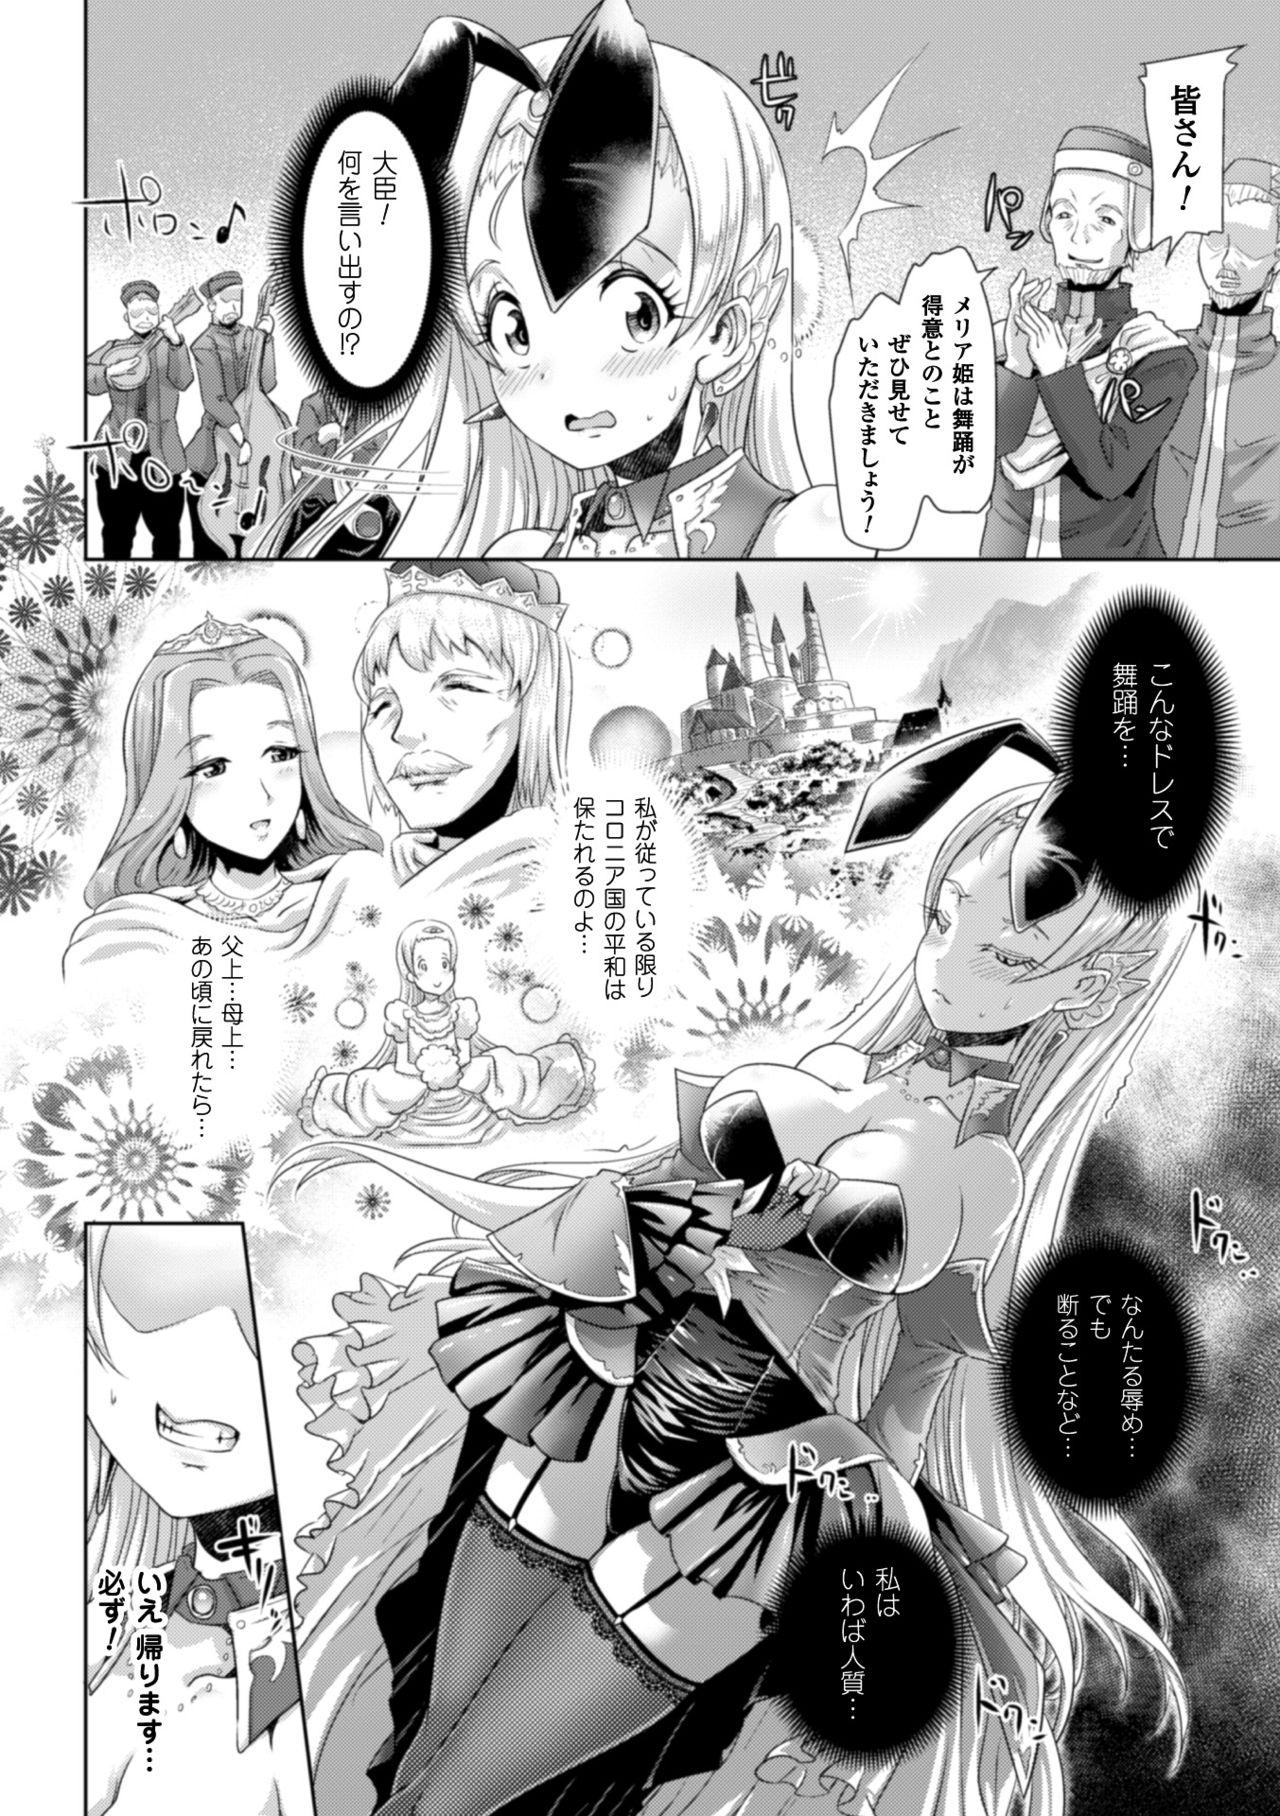 Japanese 2D Comic Magazine Waki Feti Bunny Girl Vol. 2 White Girl - Page 6